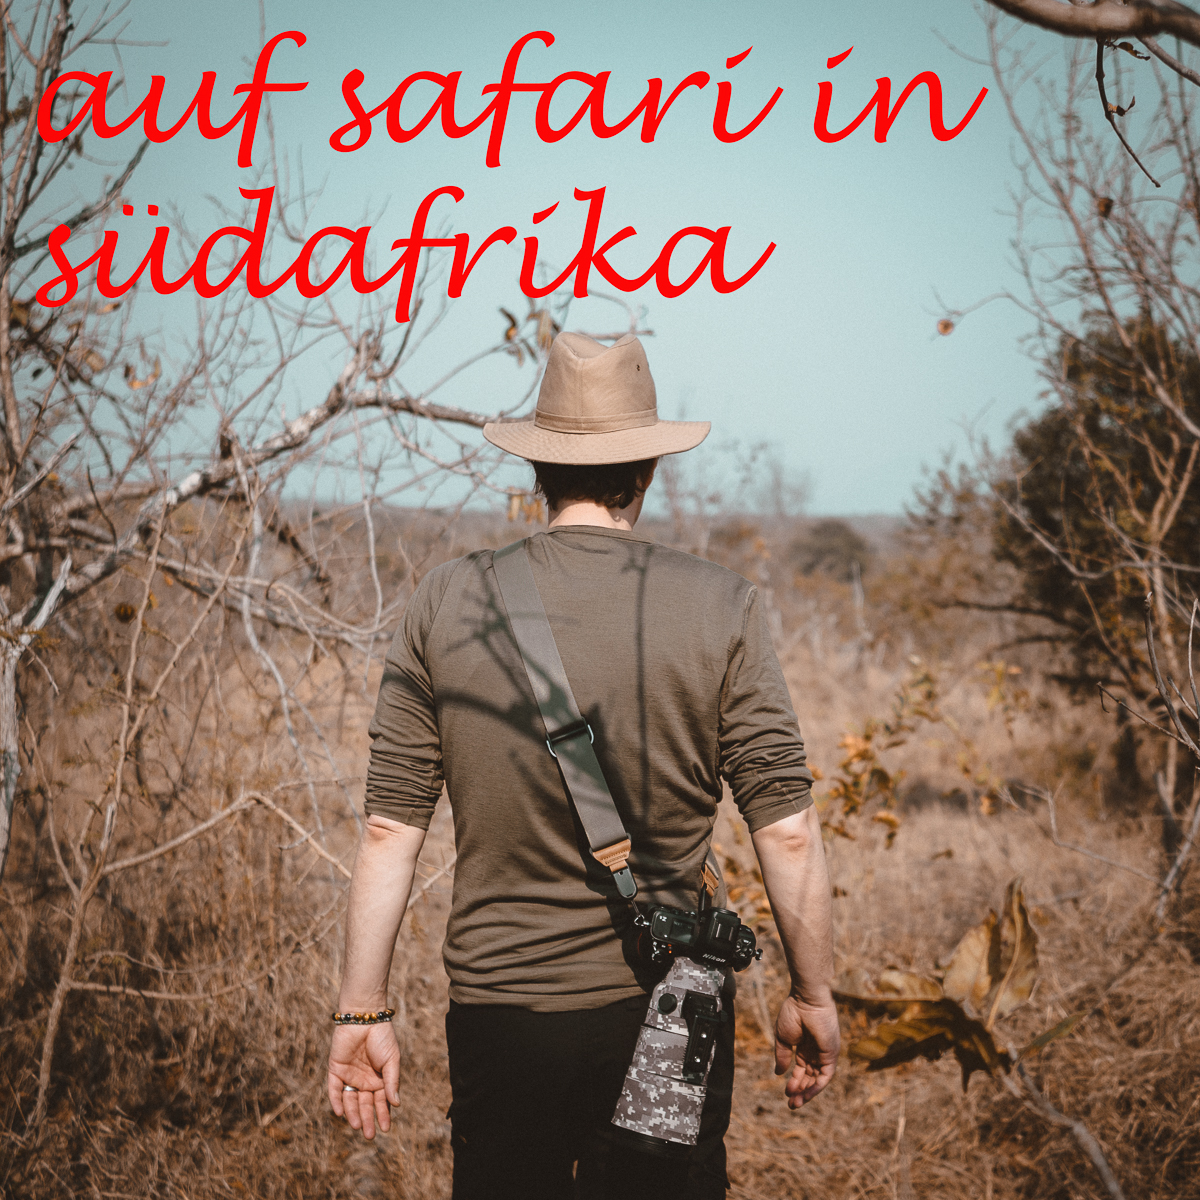 reisebericht: auf safari im südafrikanischen lowveld